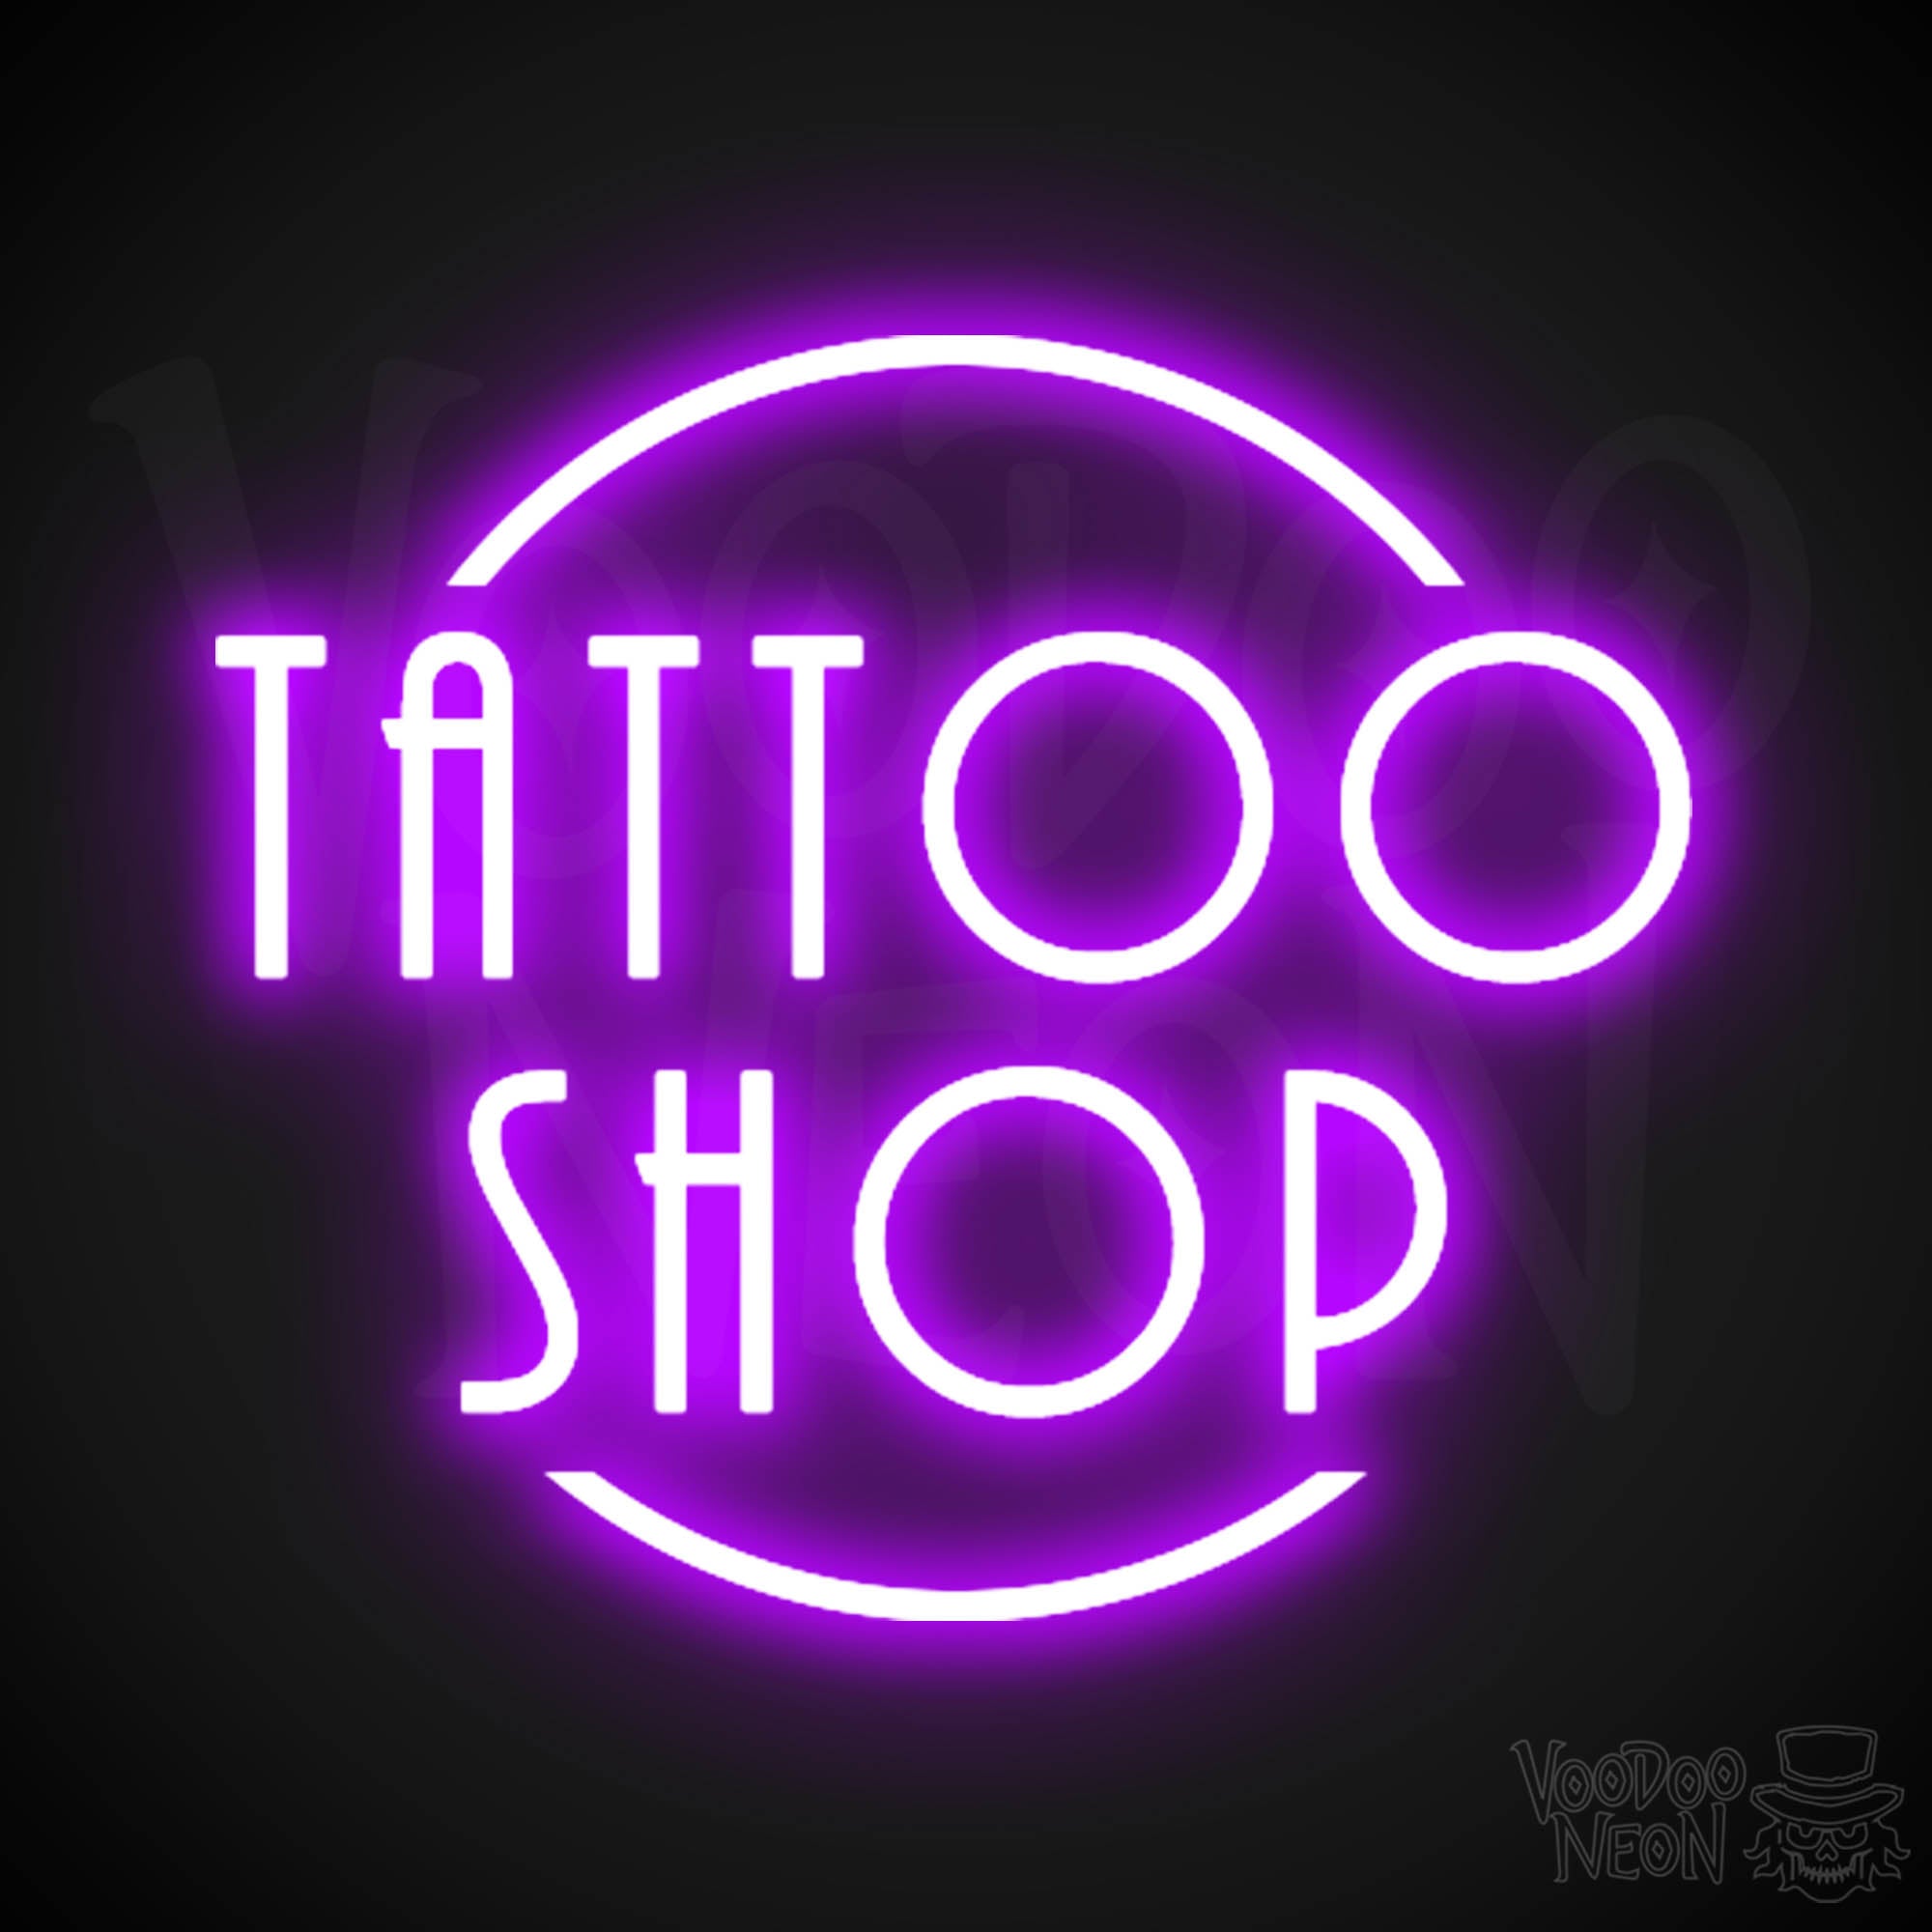 Sign Tattoo Parlour Stock Photo 204163414 | Shutterstock